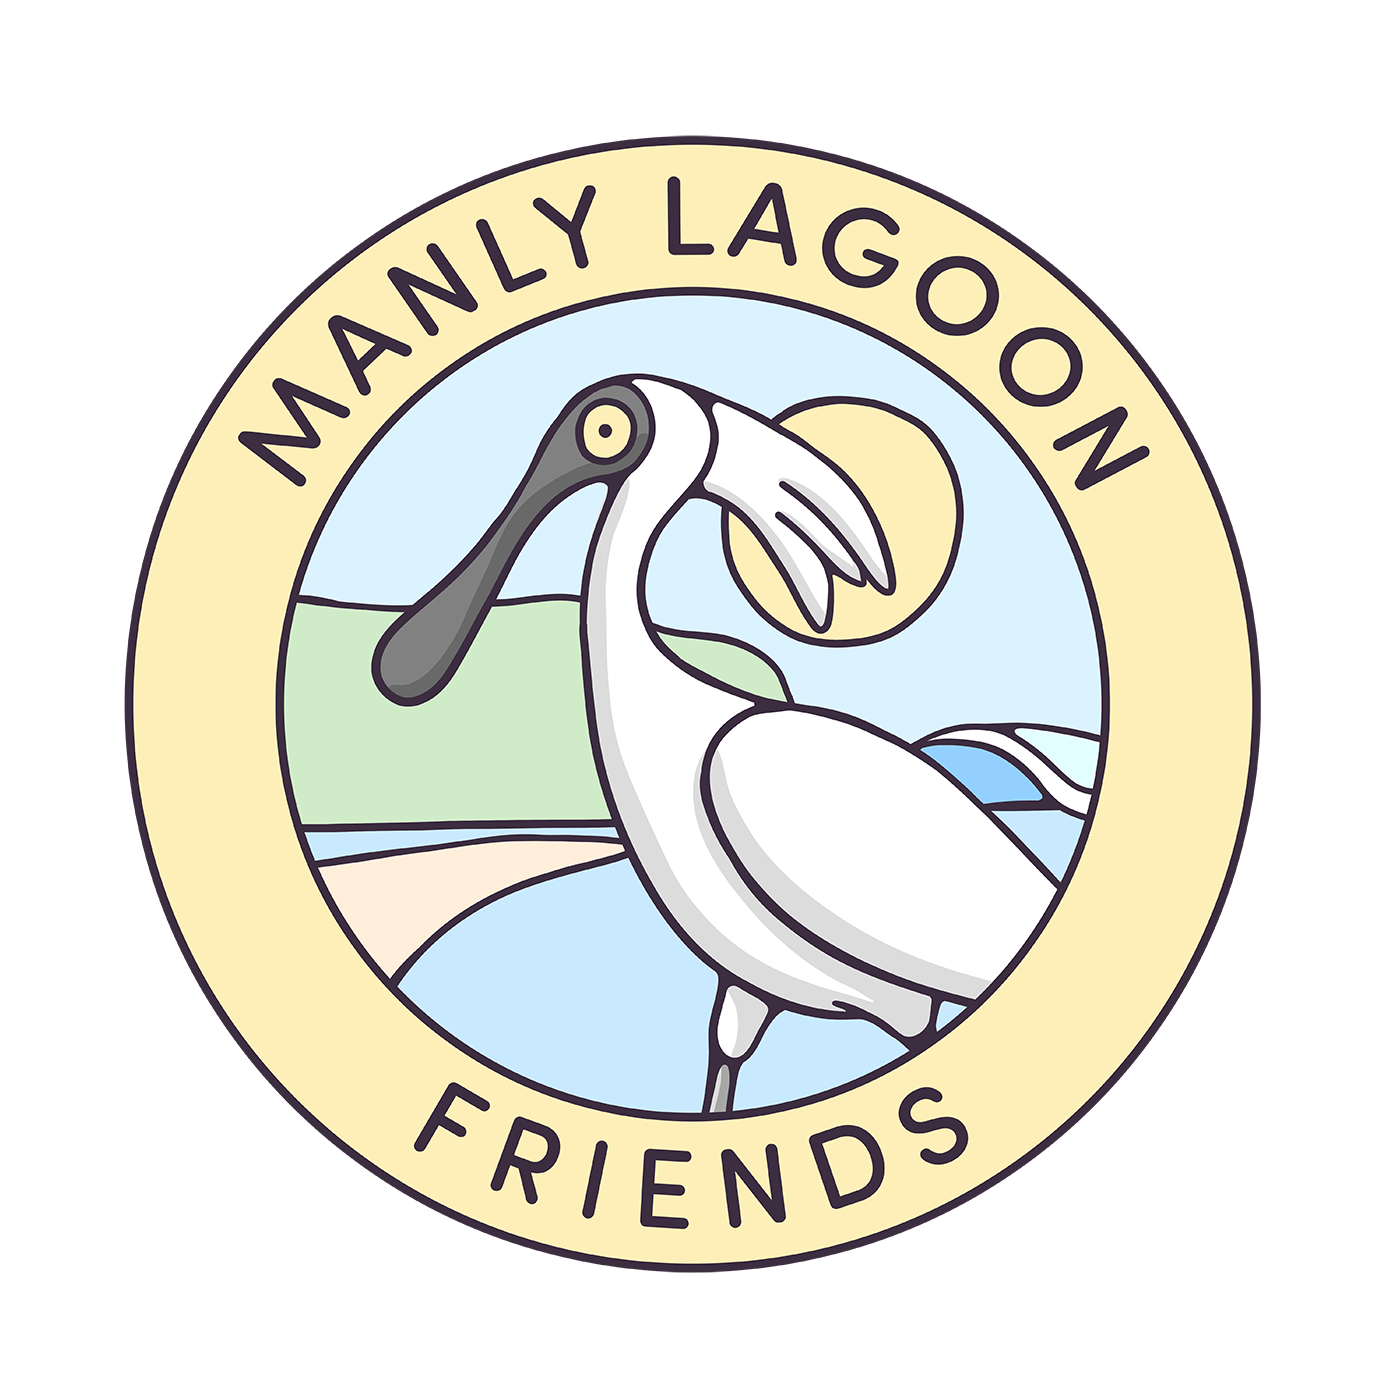 Manly Lagoon Friends Logo Design - Brentos